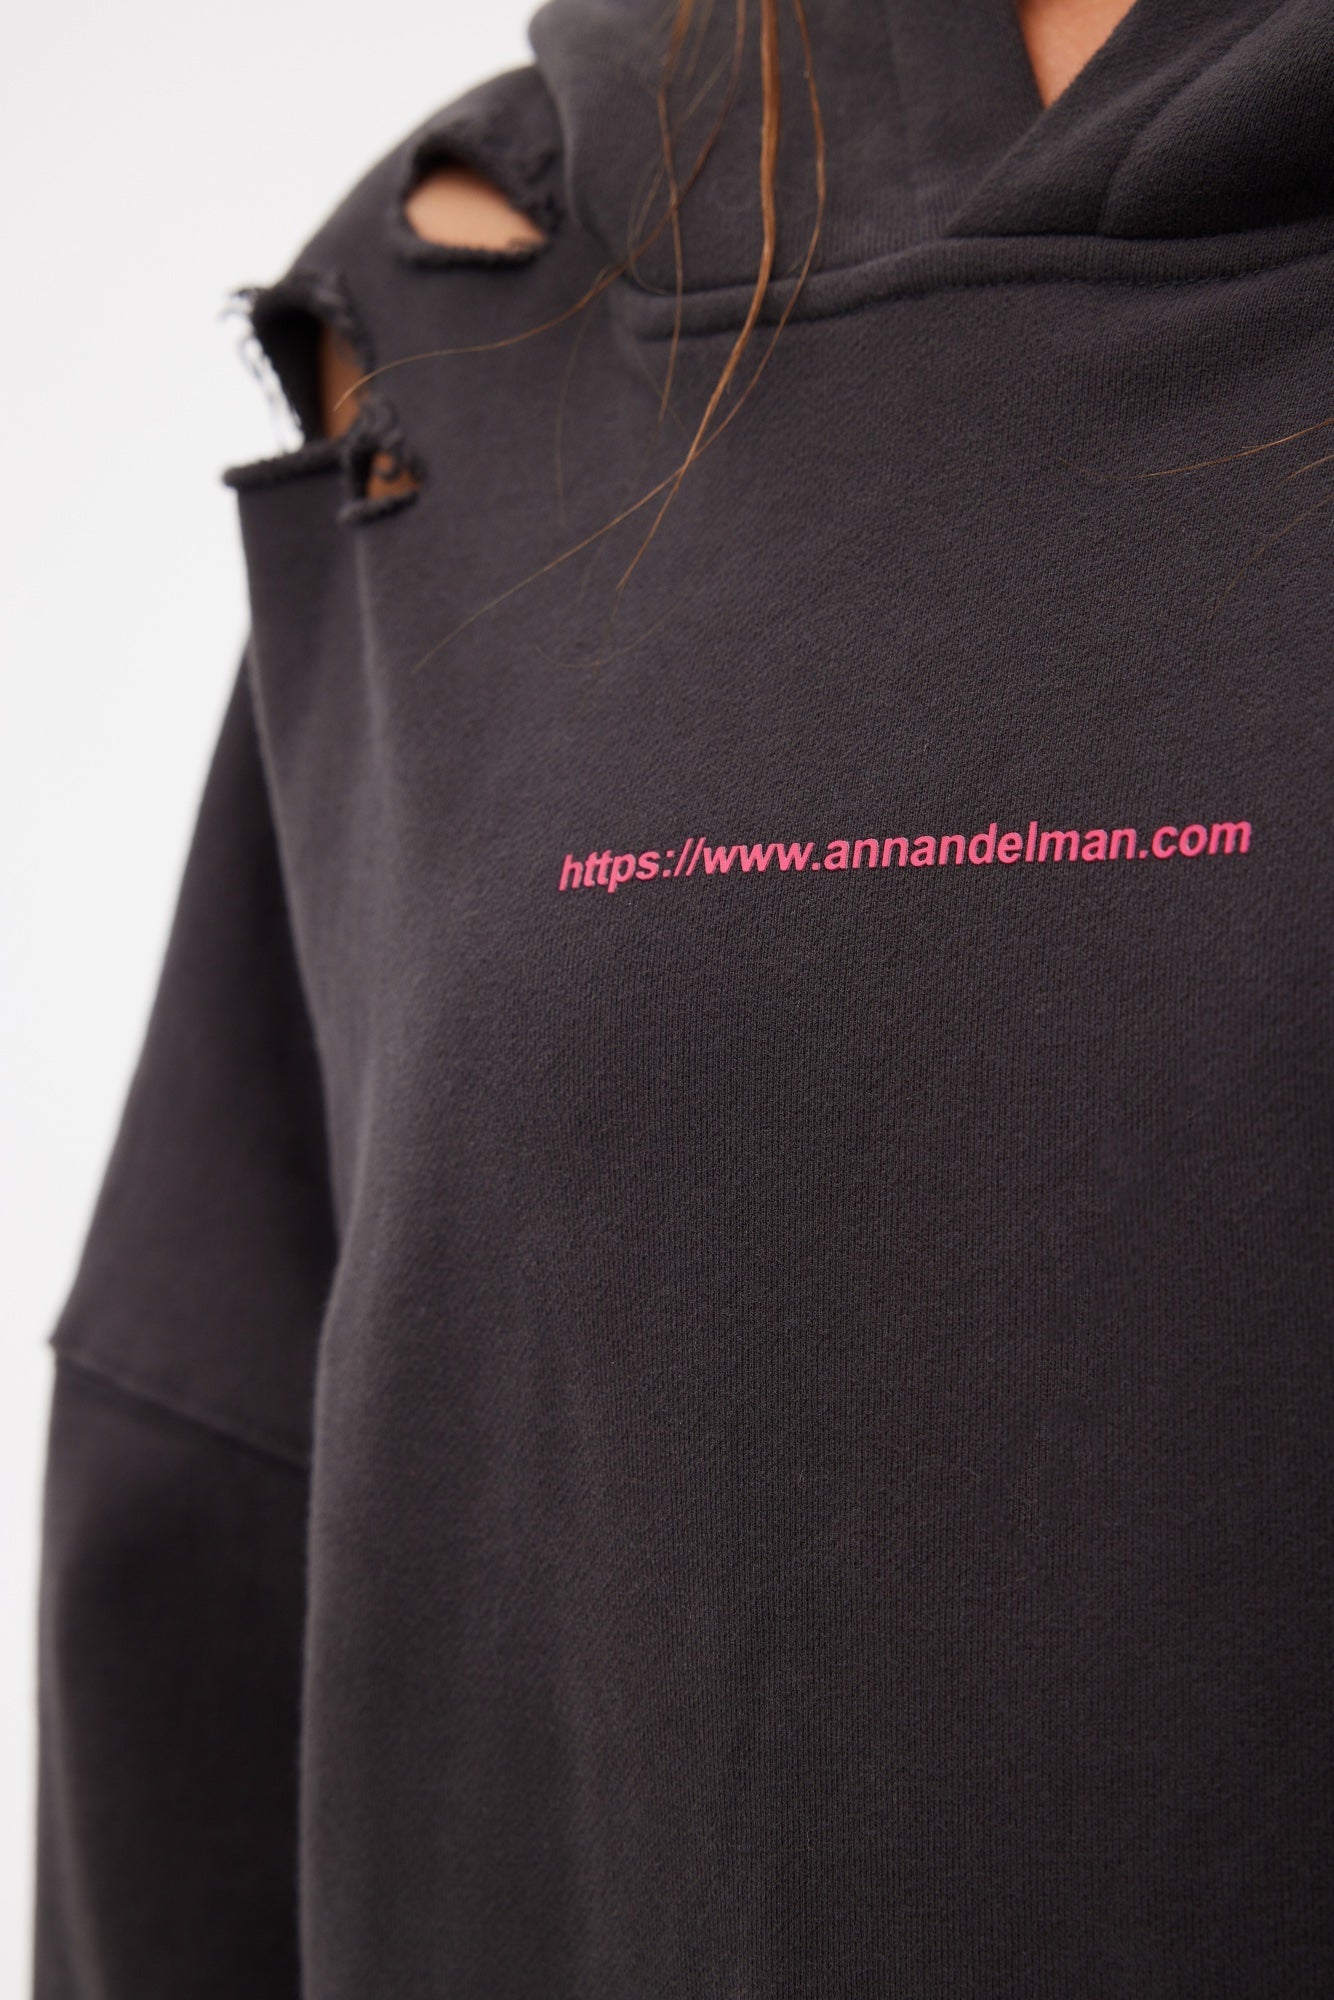 Ann Andelman Limited Color Hoodie Grey